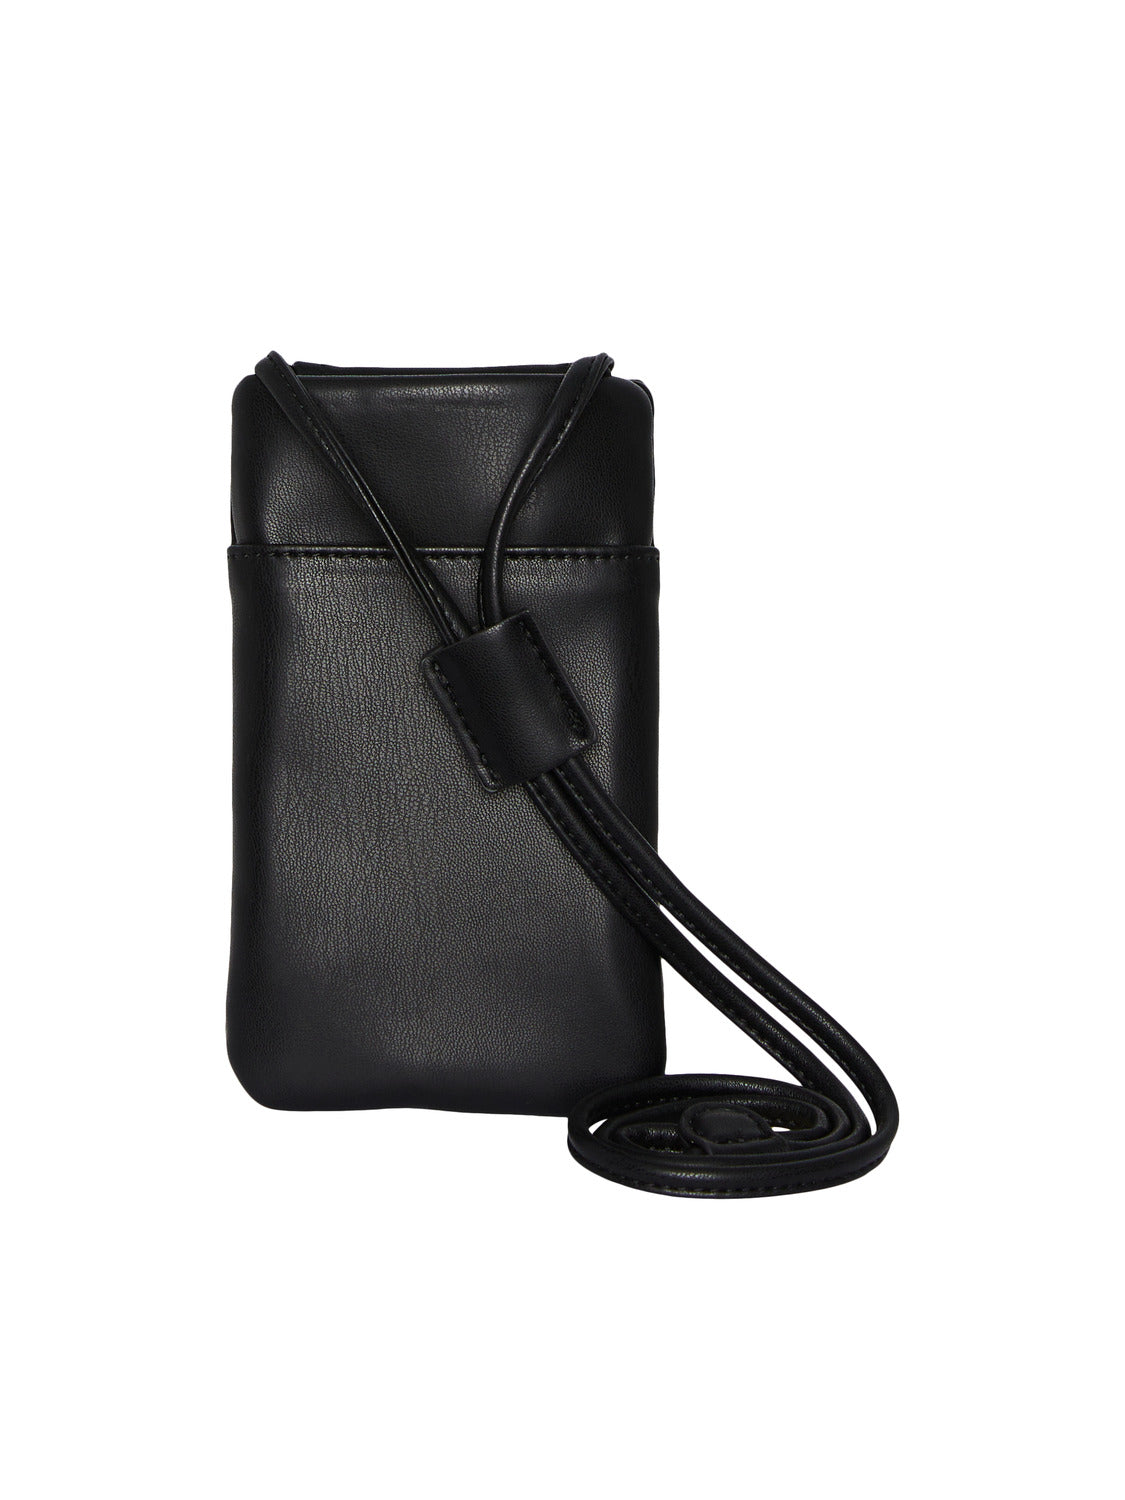 PCBELLA Handbag - Black